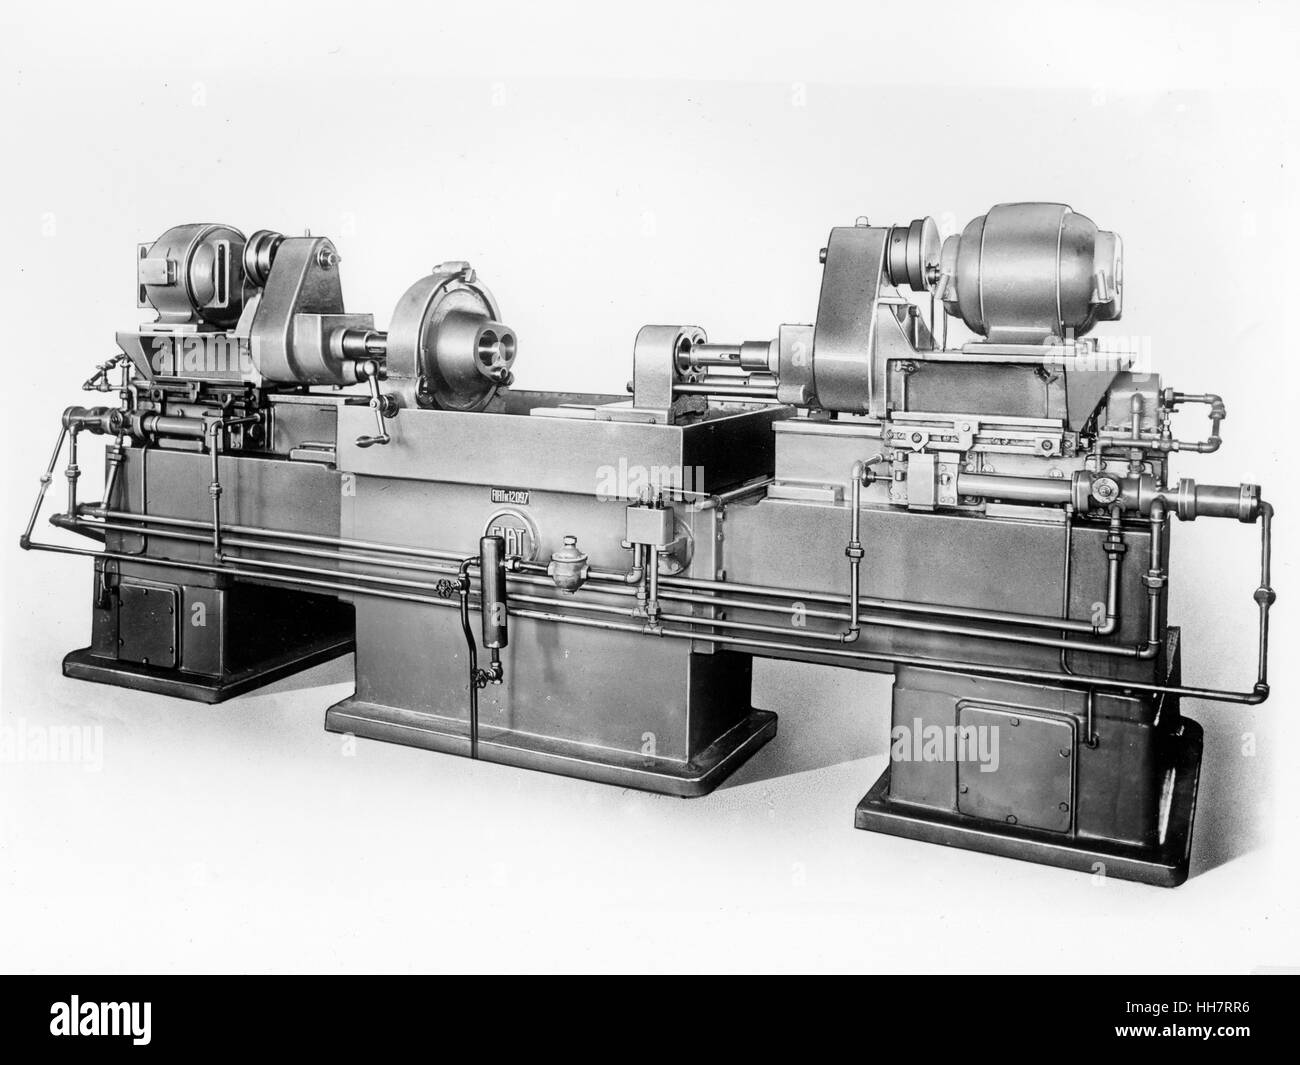 1930 - 40. Fiat - Ansaldo machine. Motor components. Stock Photo